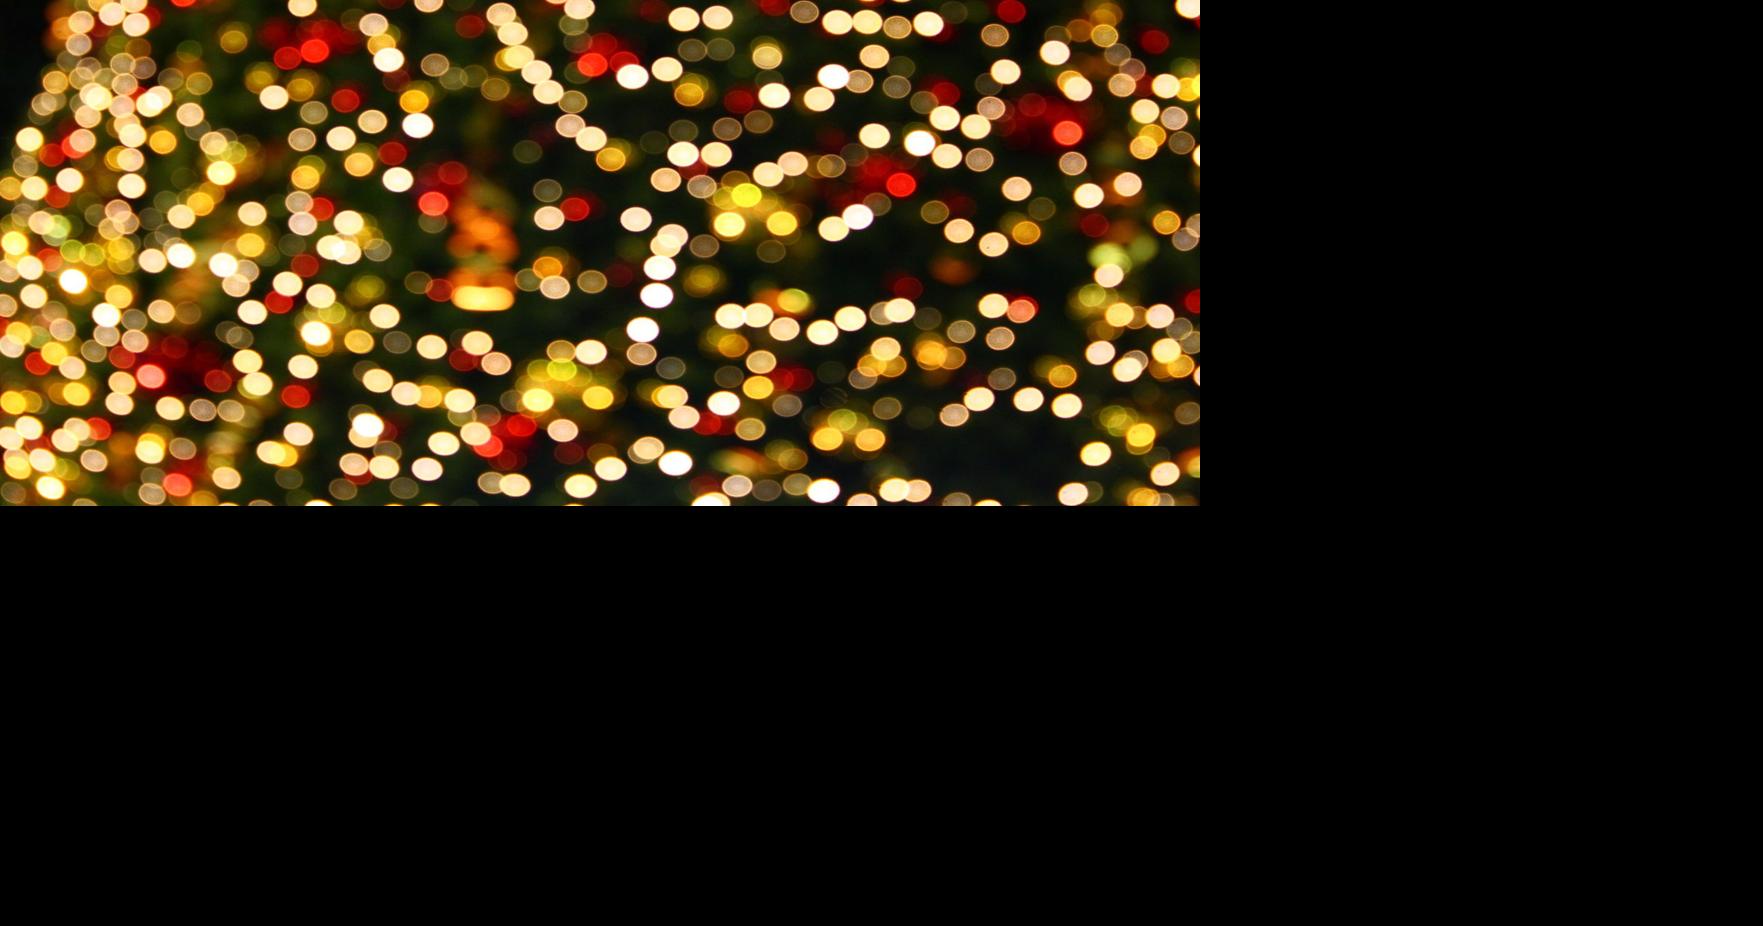 Yountville’s Christmas tree lighting ceremony returns Sunday night